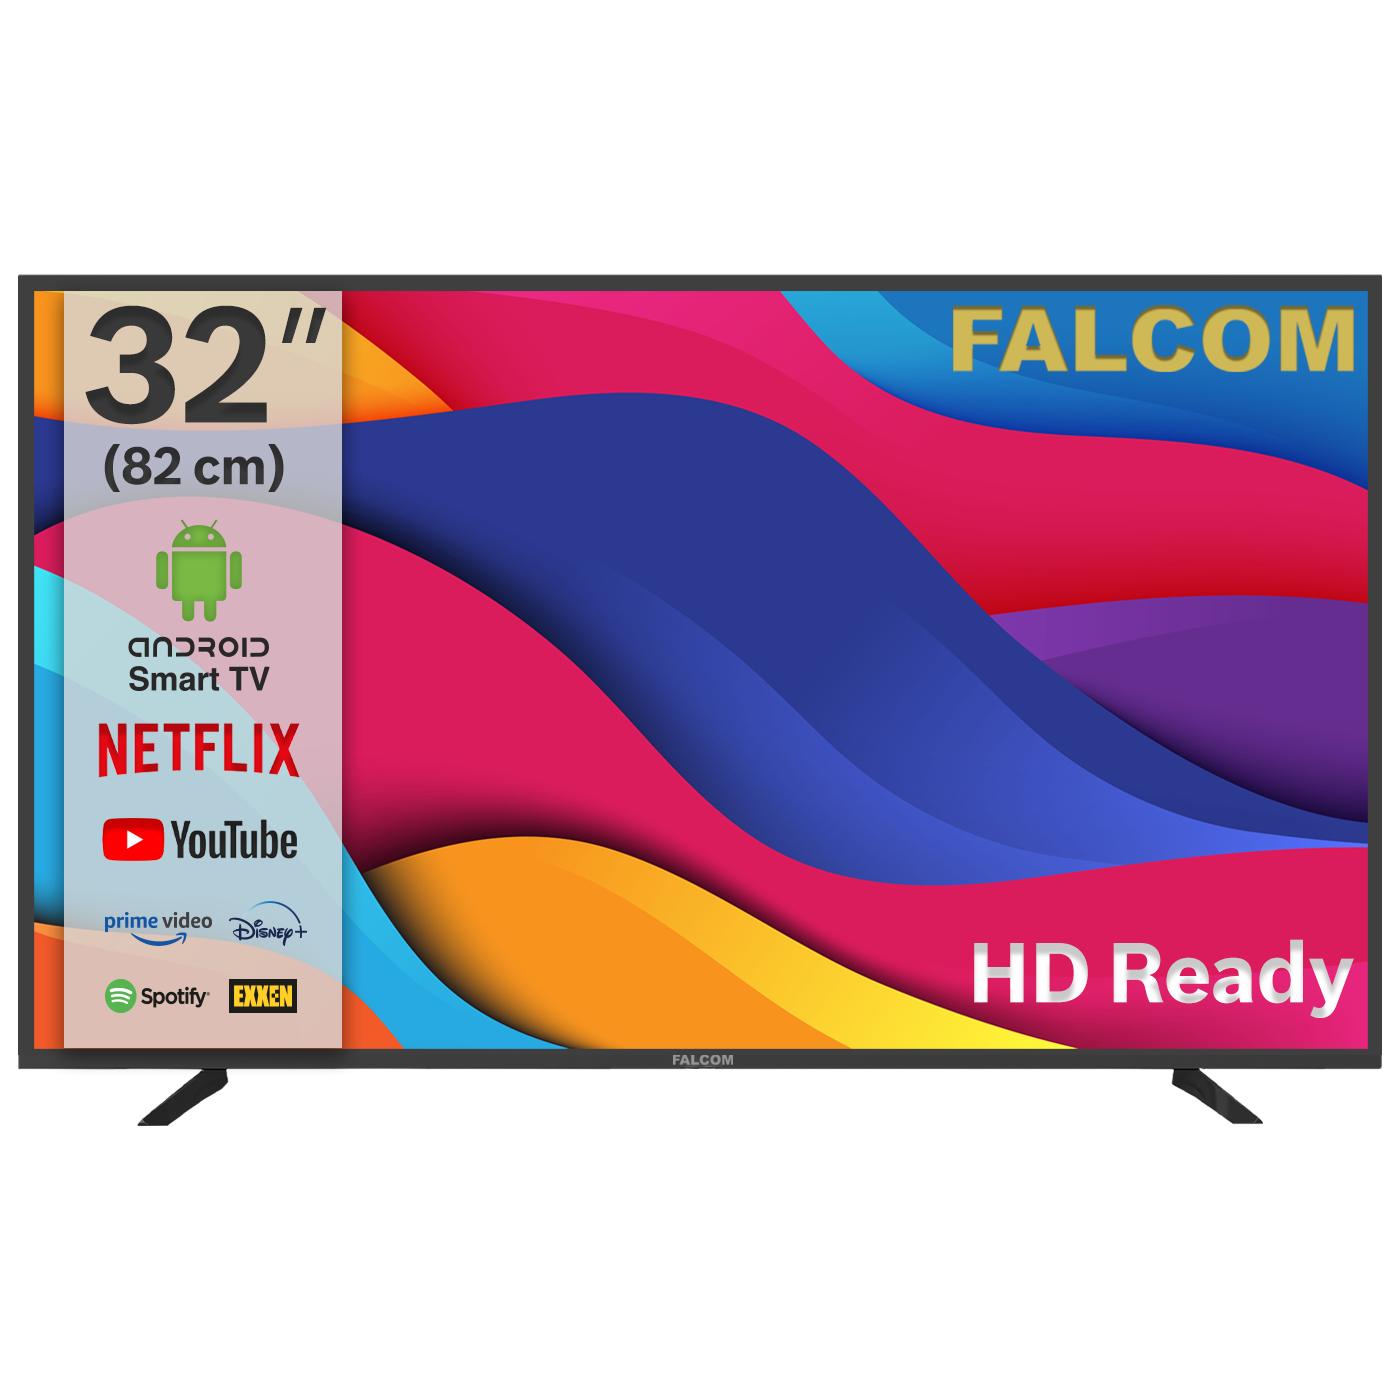 Falcom TV - Smart LED TV @Android 32